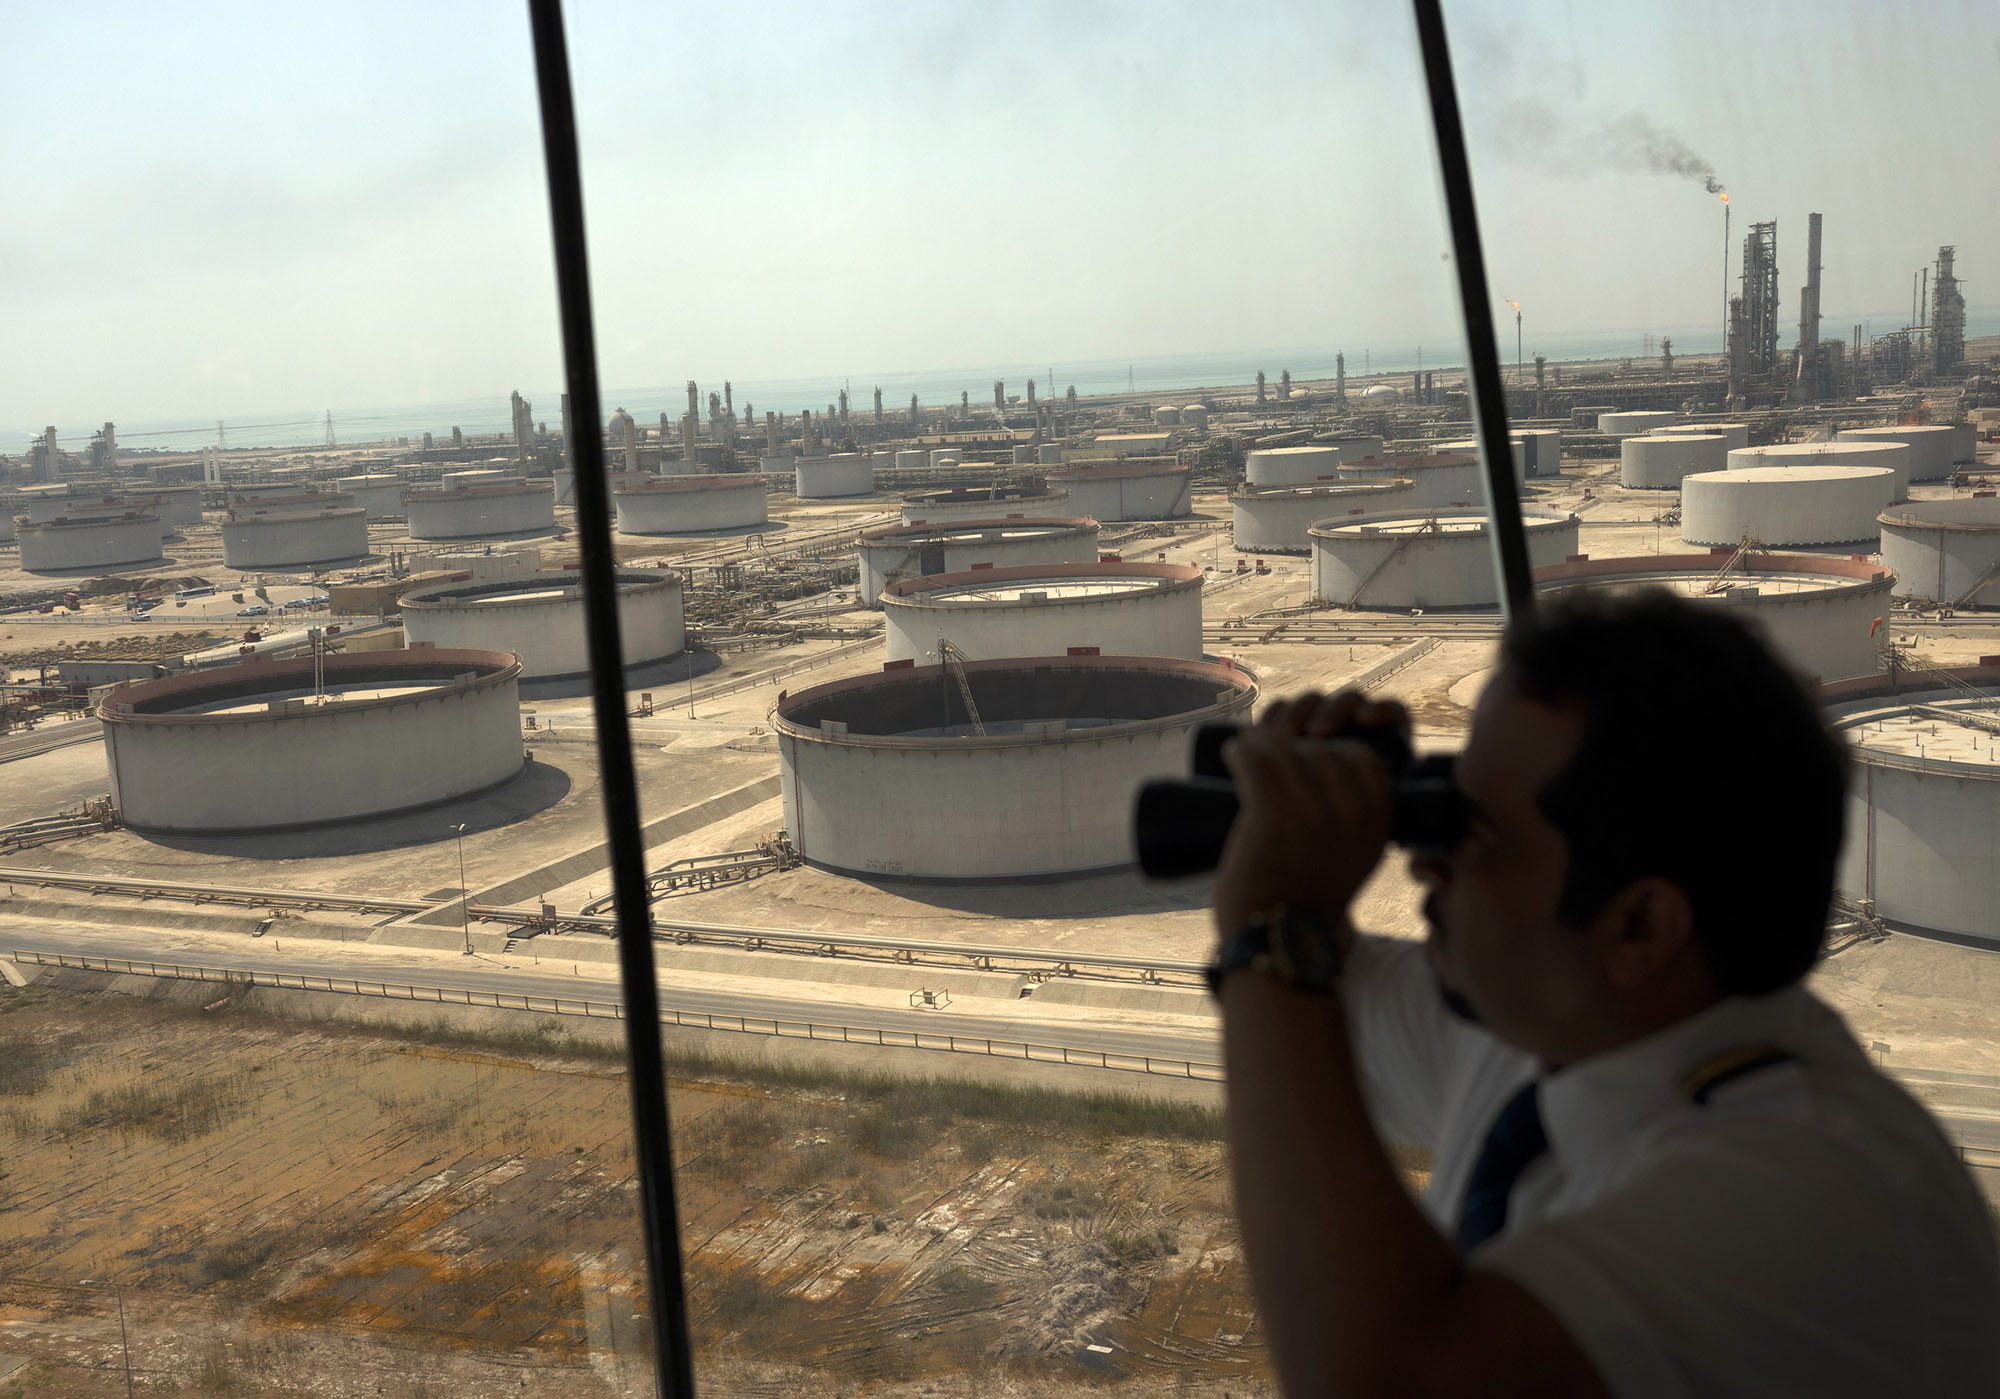 Saudi Aramco's Ras Tanura oil refinery and terminal in Ras Tanura, Saudi Arabia.